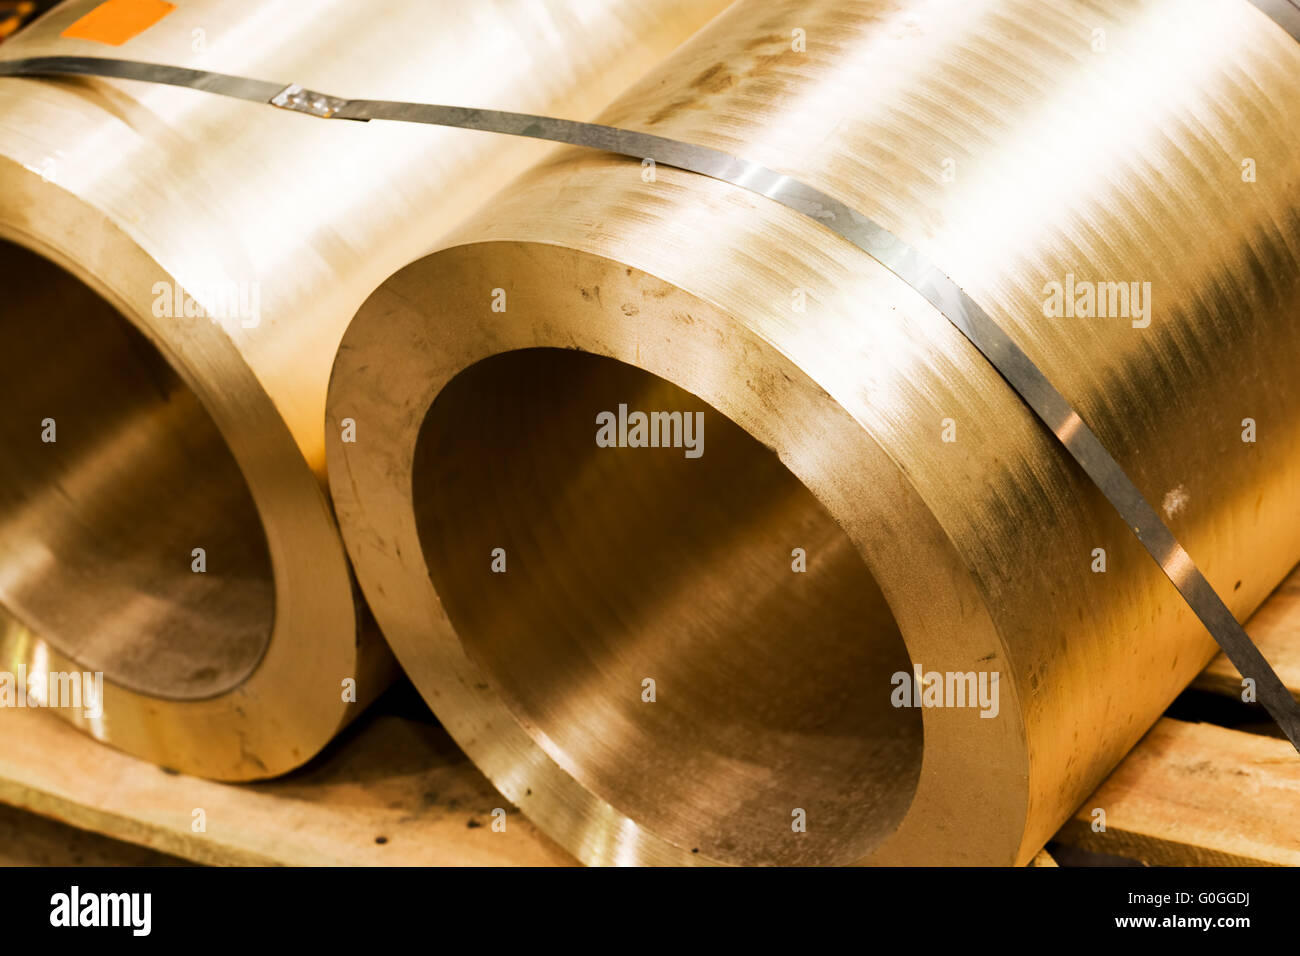 Industrial hardened steel cylinders in workshop. Industry. Stock Photo